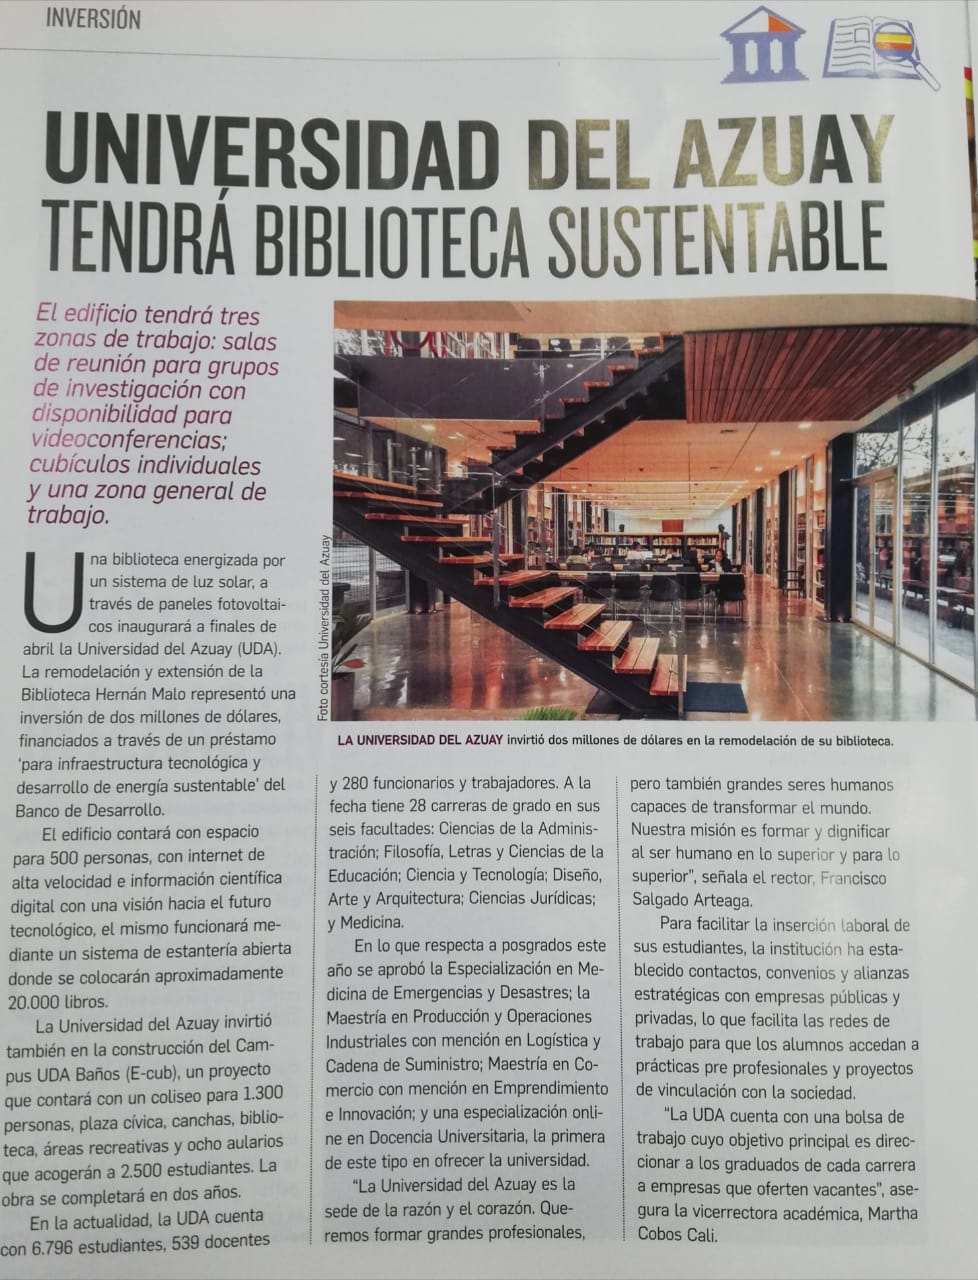 Universidad del Azuay will have a sustainable library